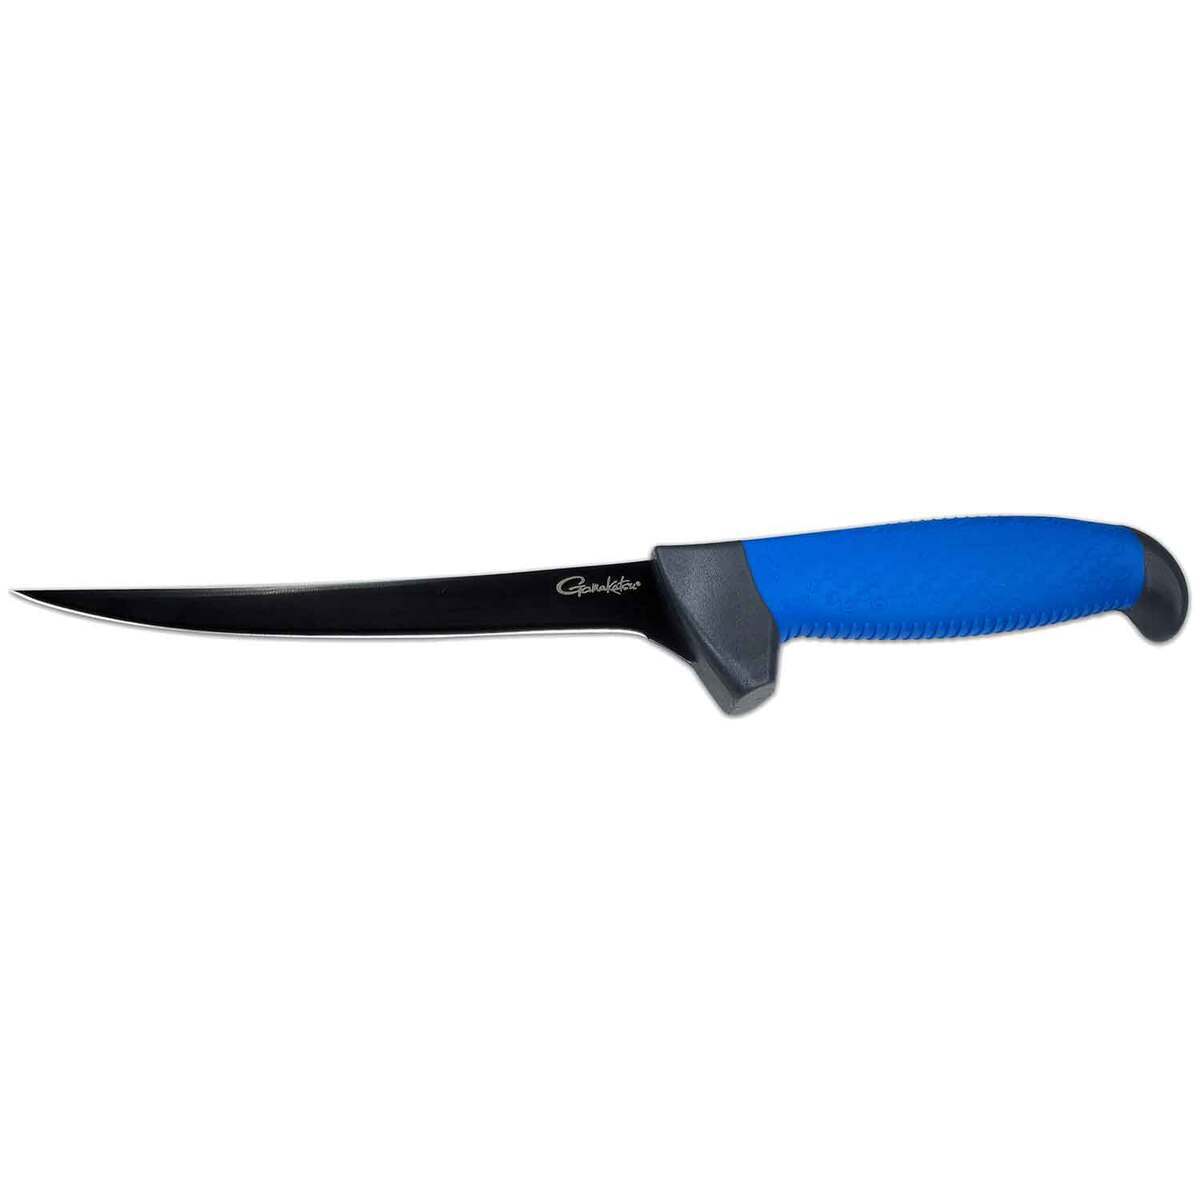 Gamakatsu 6 inch Fillet Knife - Blue | Knives.com